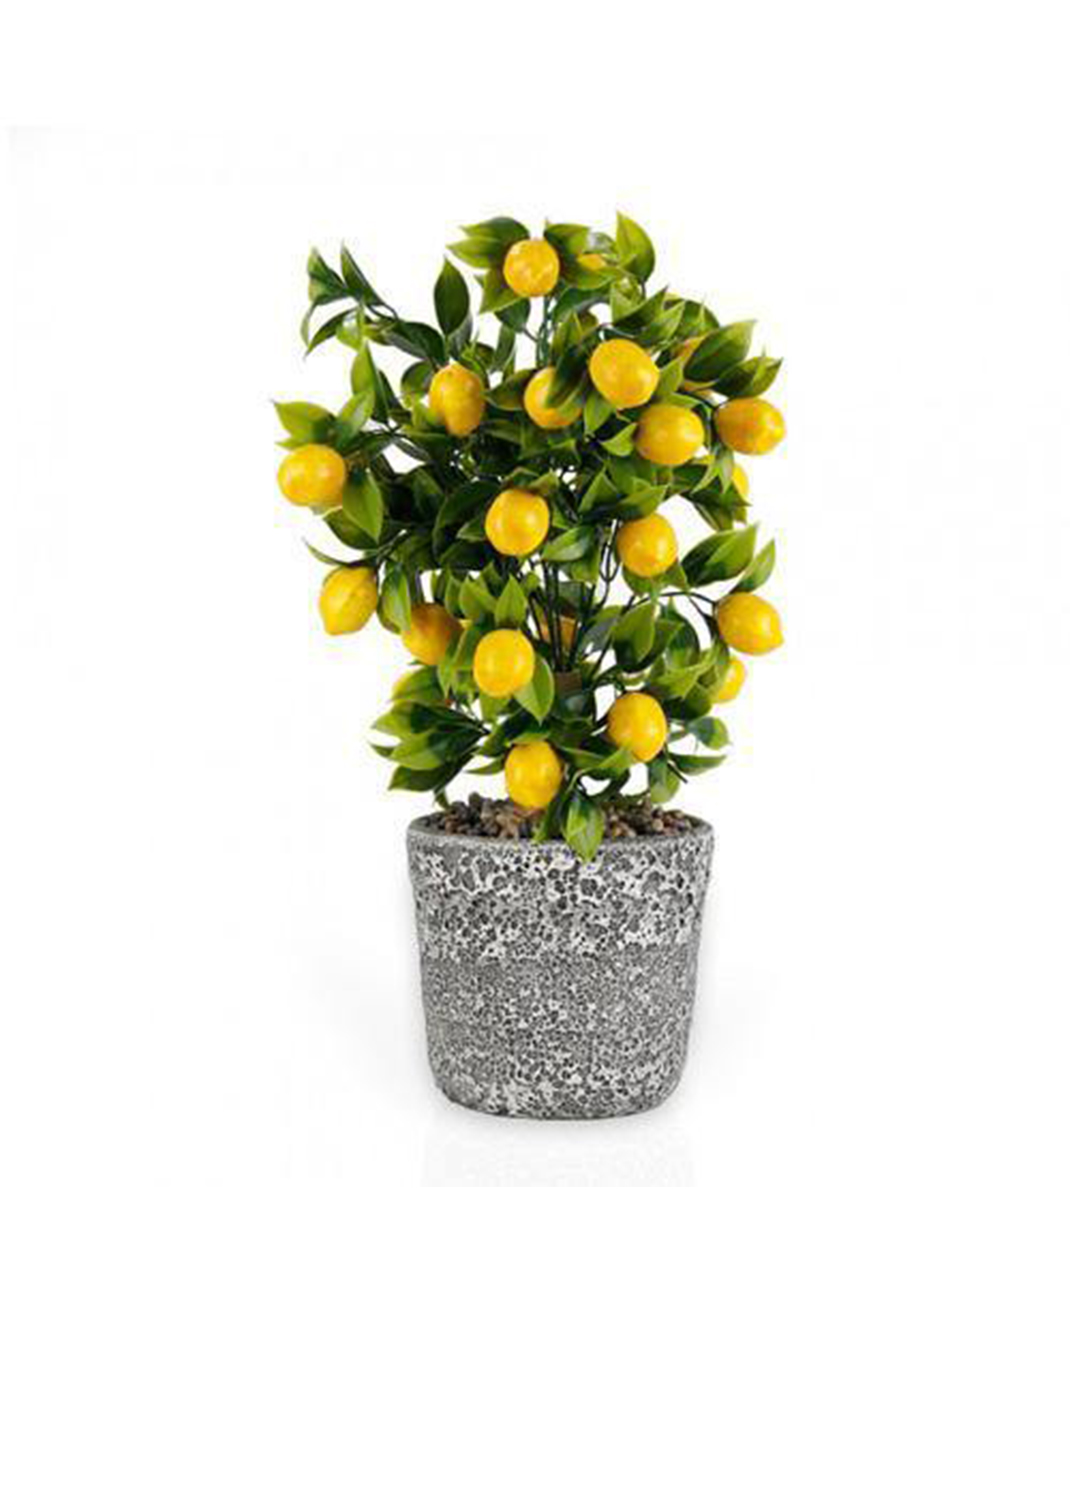 Lemon Tree, Citrus Lemon size 1.2 m    / with fruit 